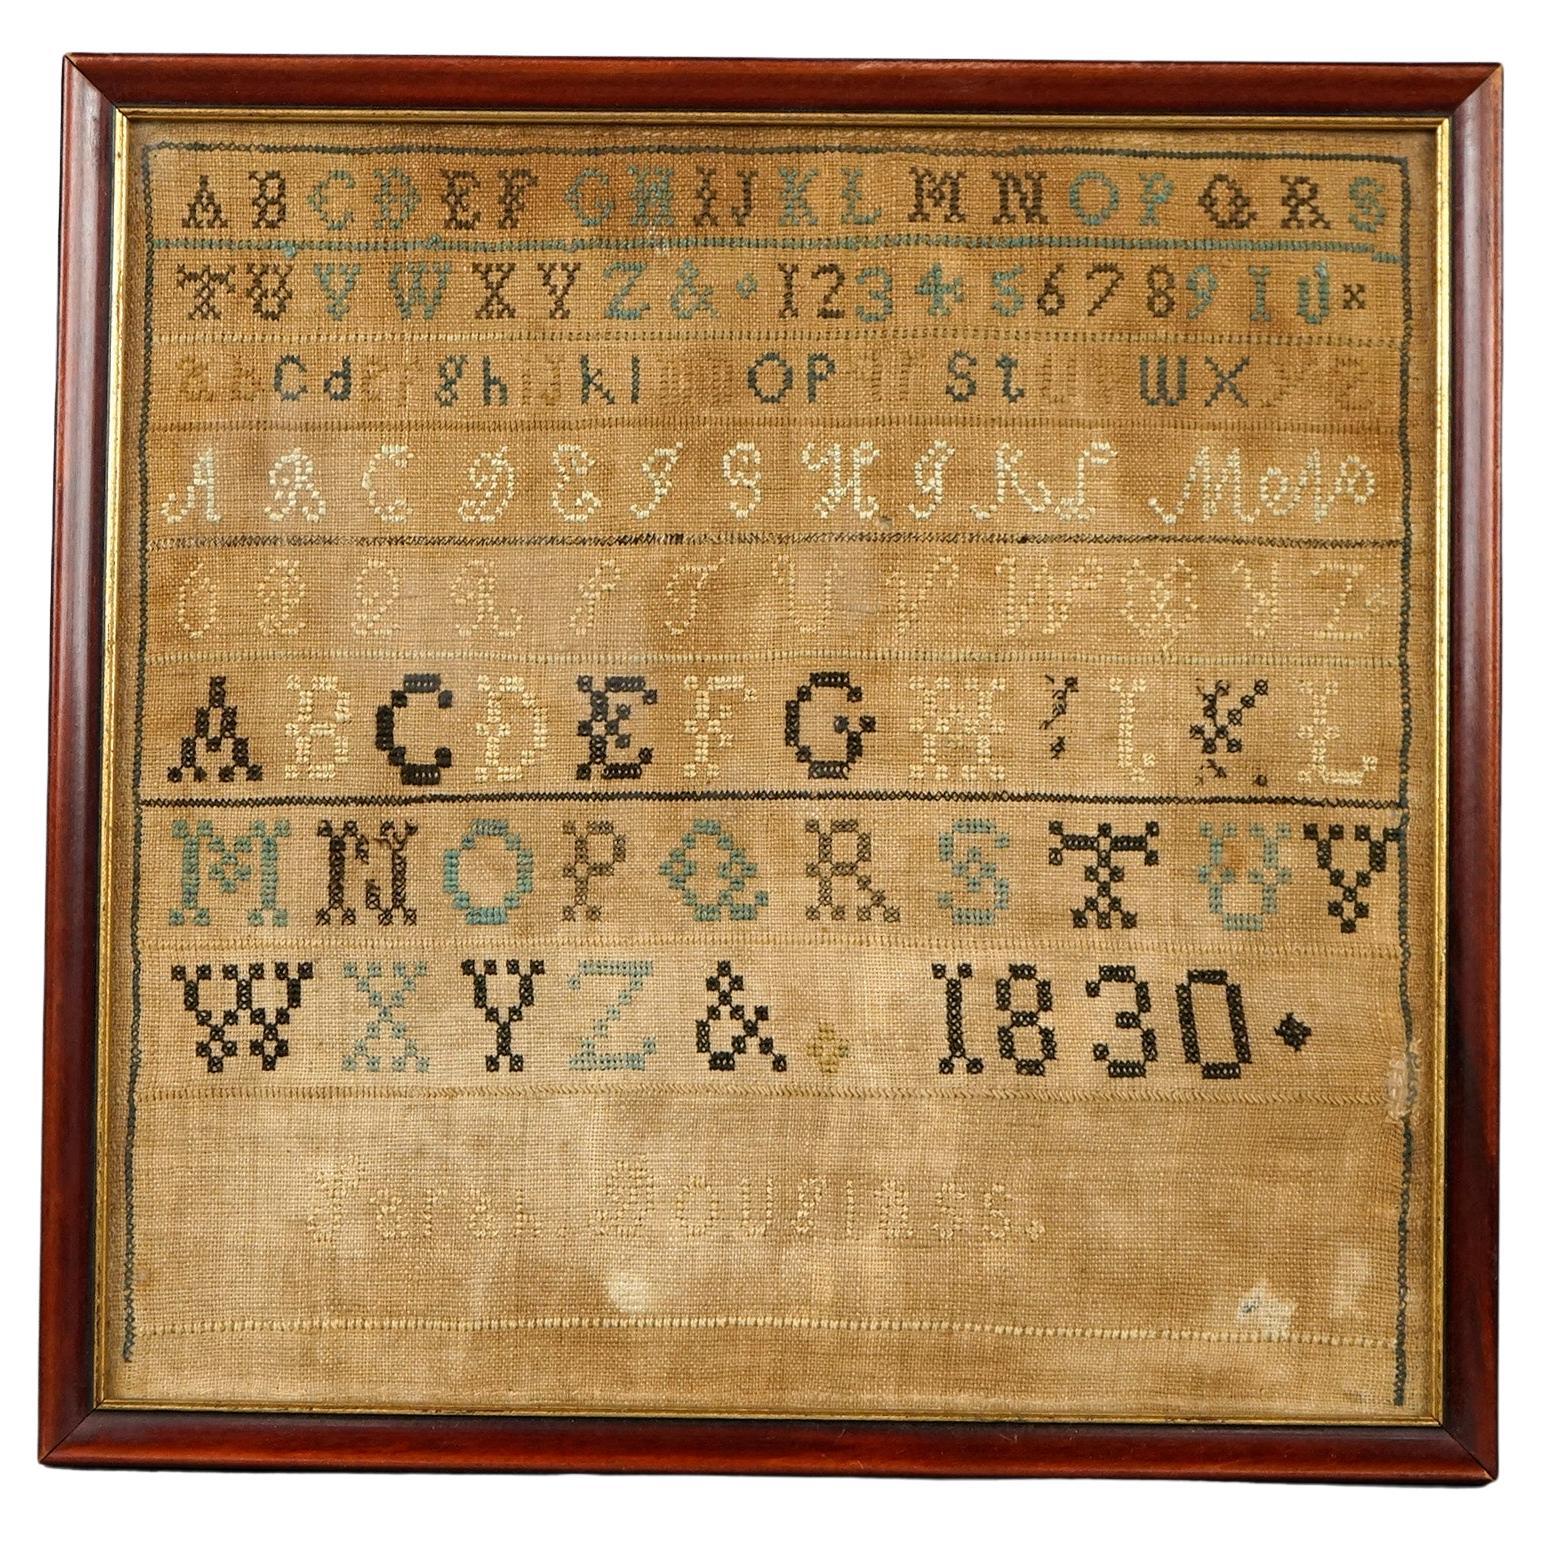 Antique Framed Hand Crafted Needlework ABC Alphabet Sampler Dated 1830